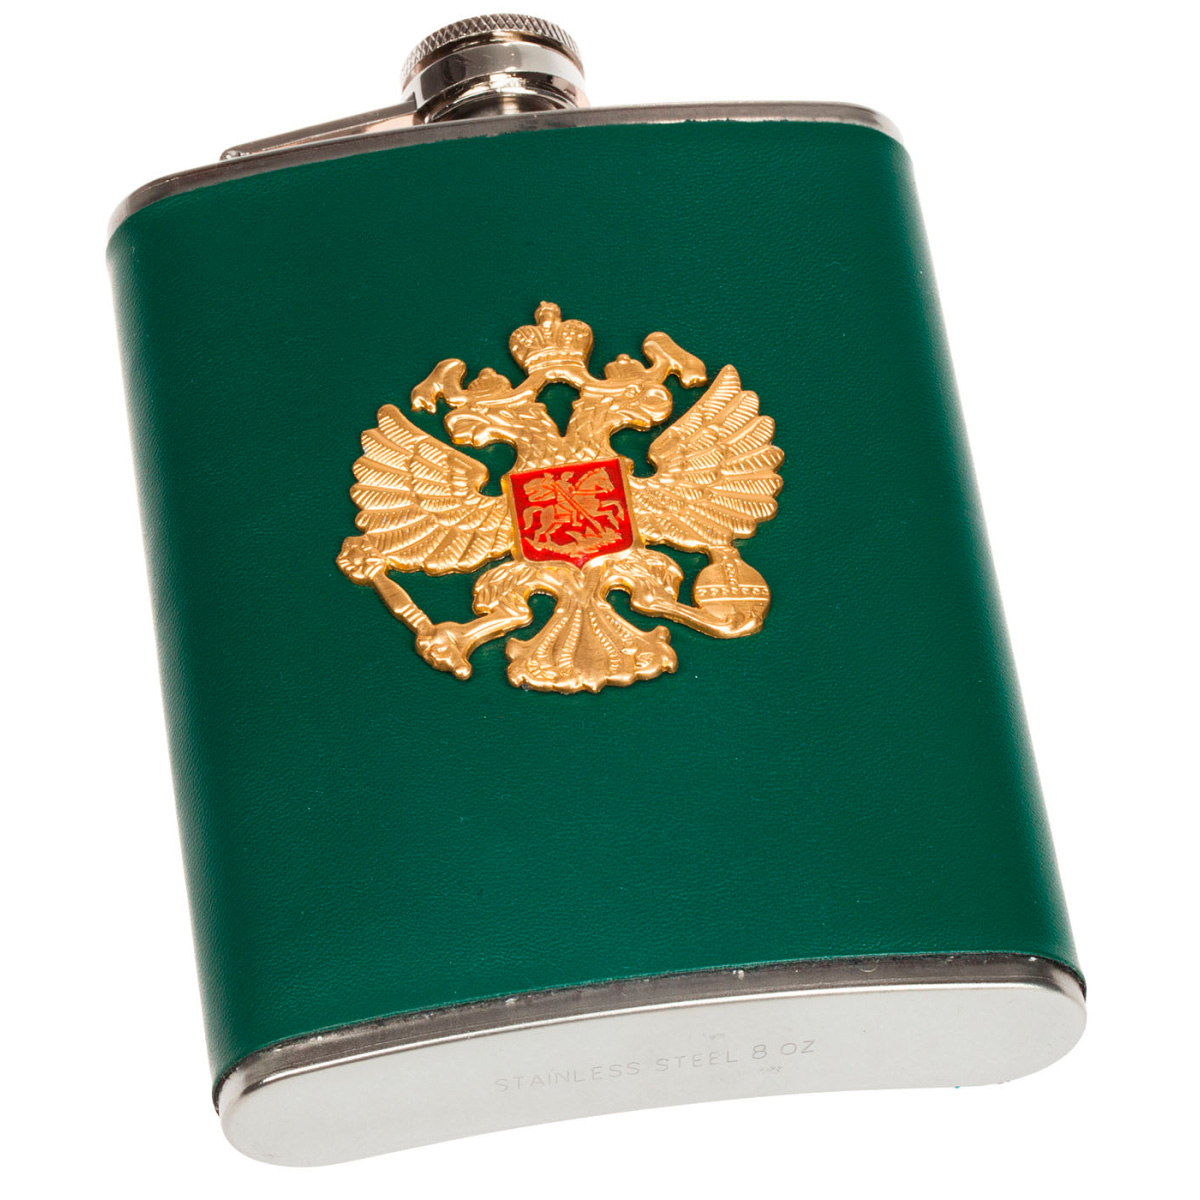 Фляга Voenpro зеленая, кожа, герб РФ, 9 унций